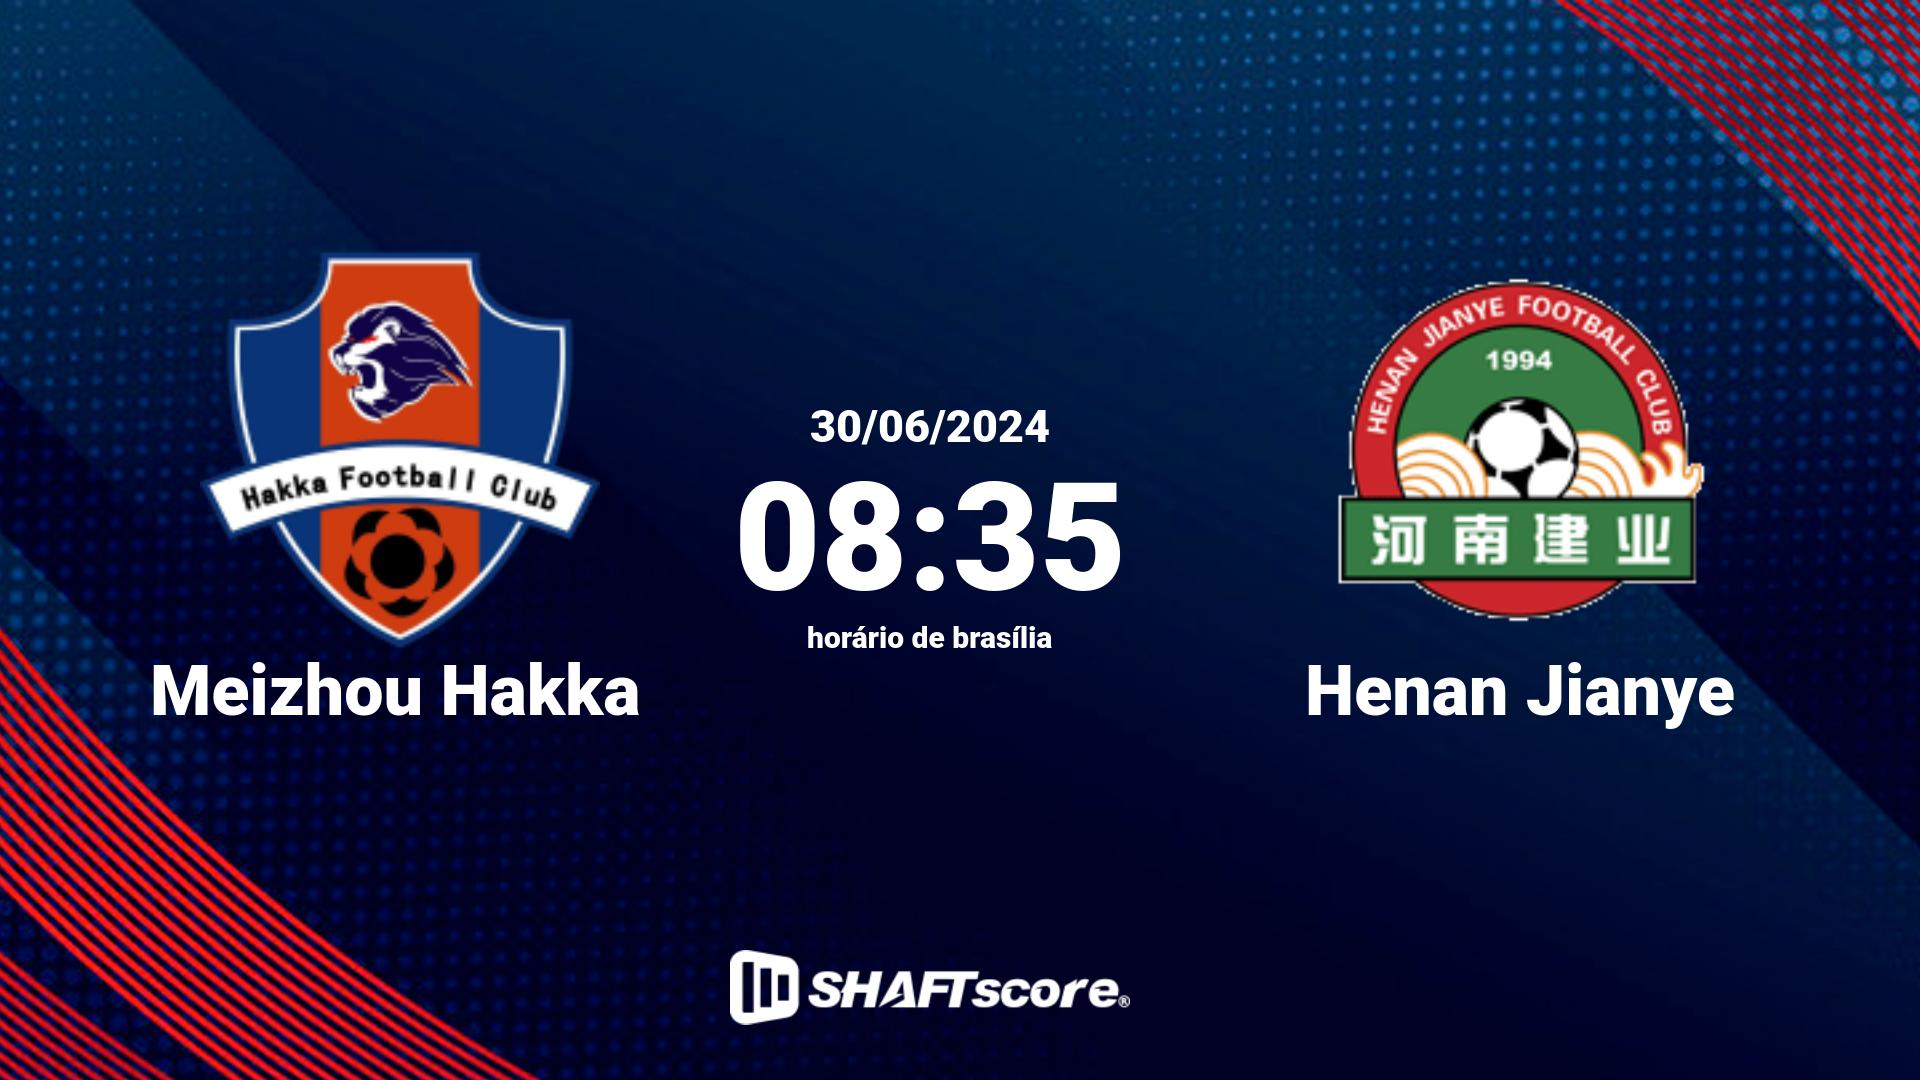 Estatísticas do jogo Meizhou Hakka vs Henan Jianye 30.06 08:35